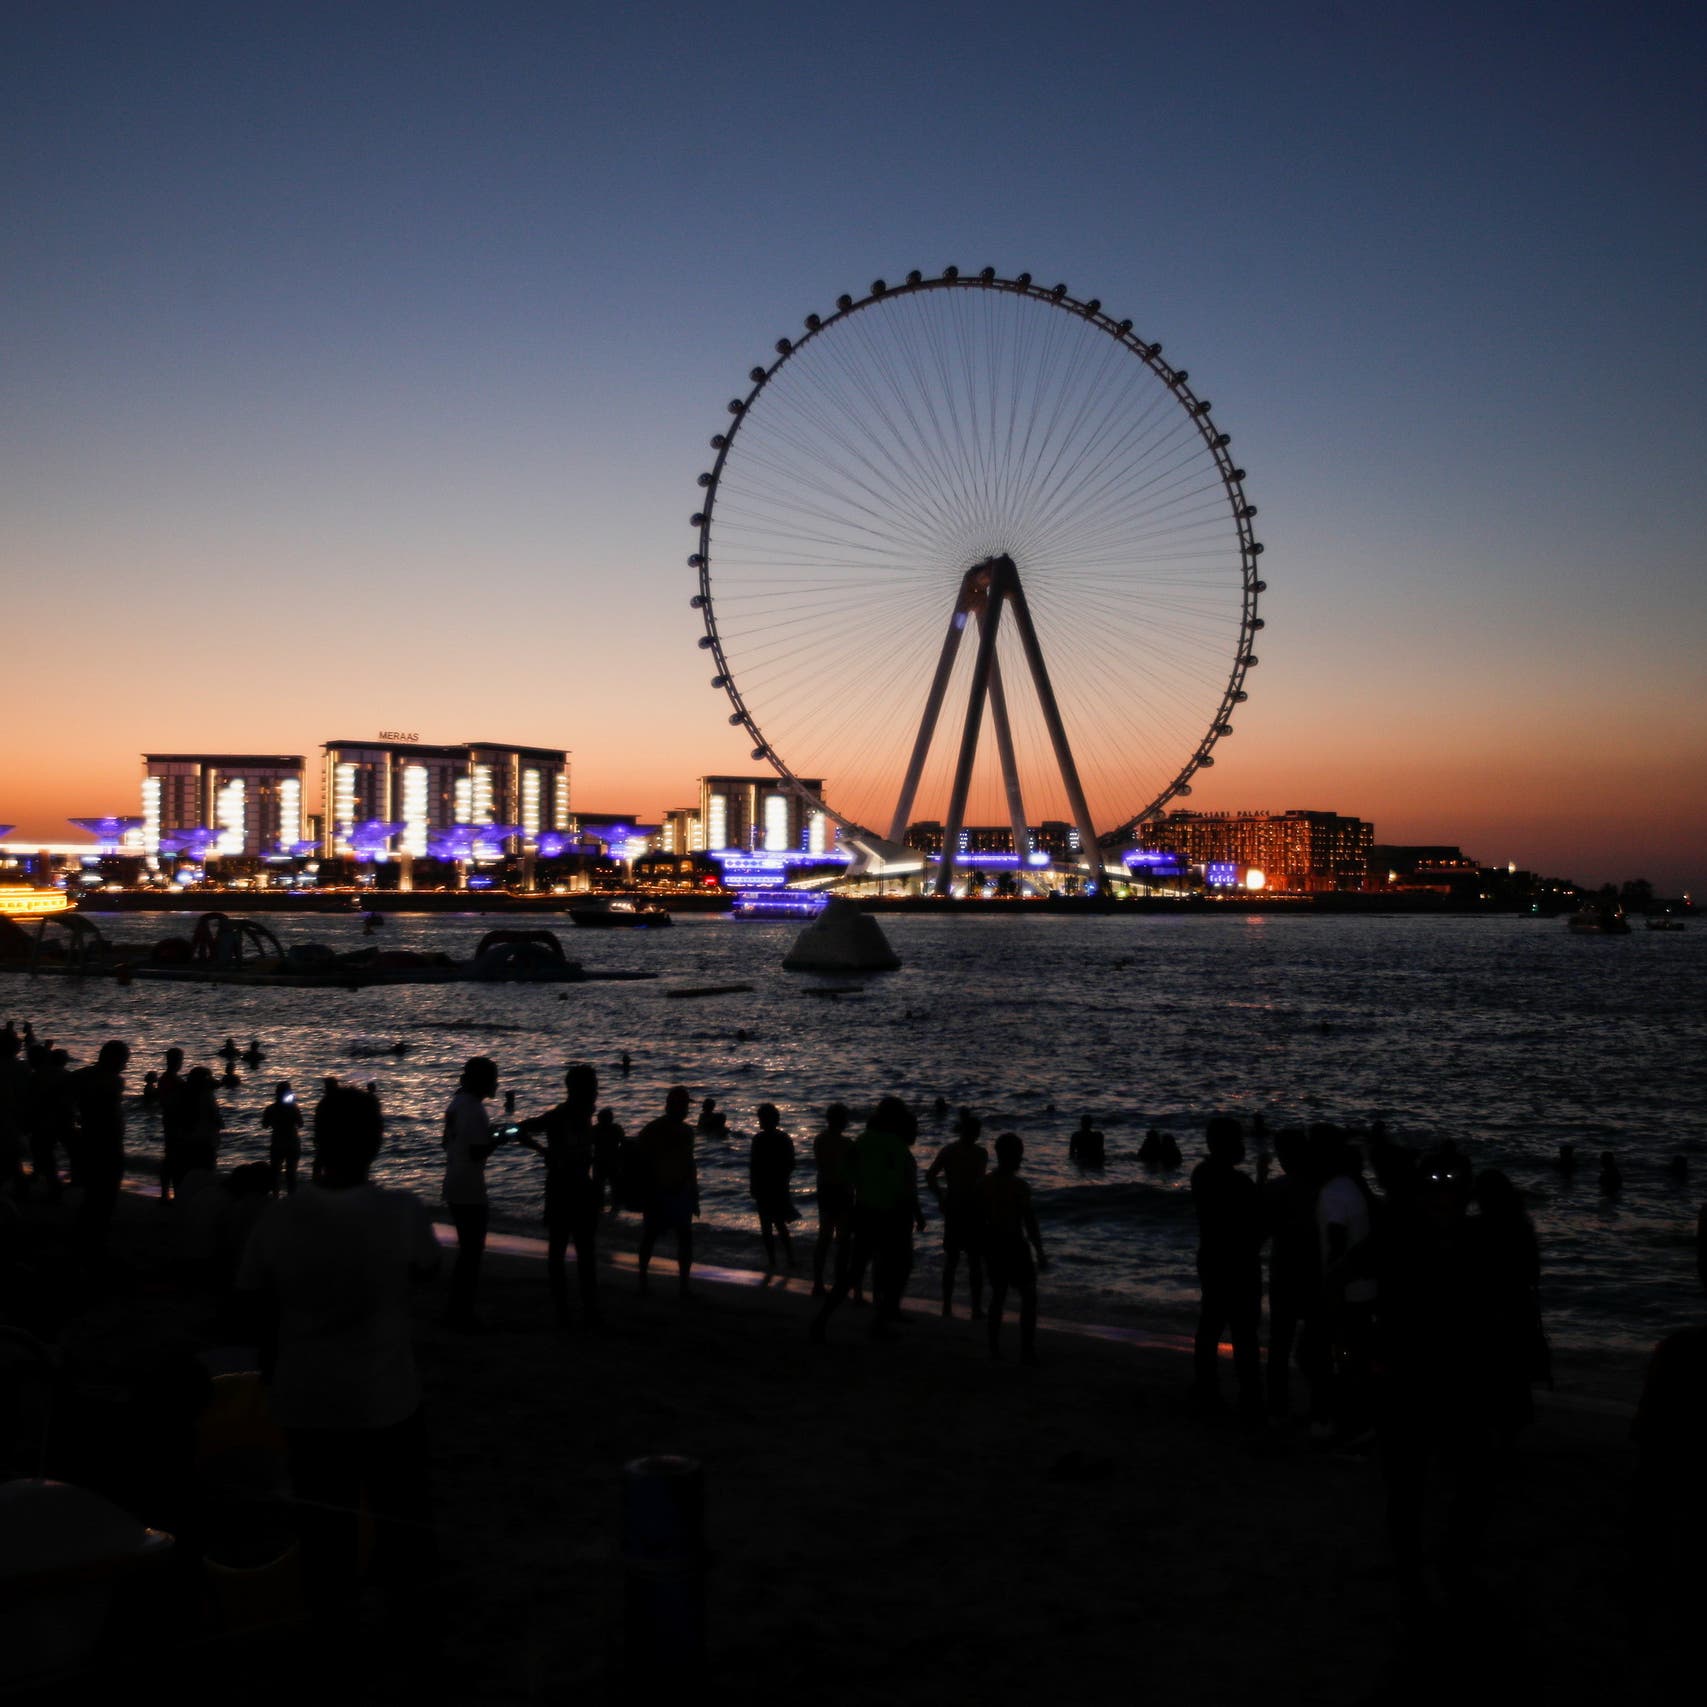 Ain Dubai shuts down for ‘periodic enhancements,’ will reopen after Ramadan